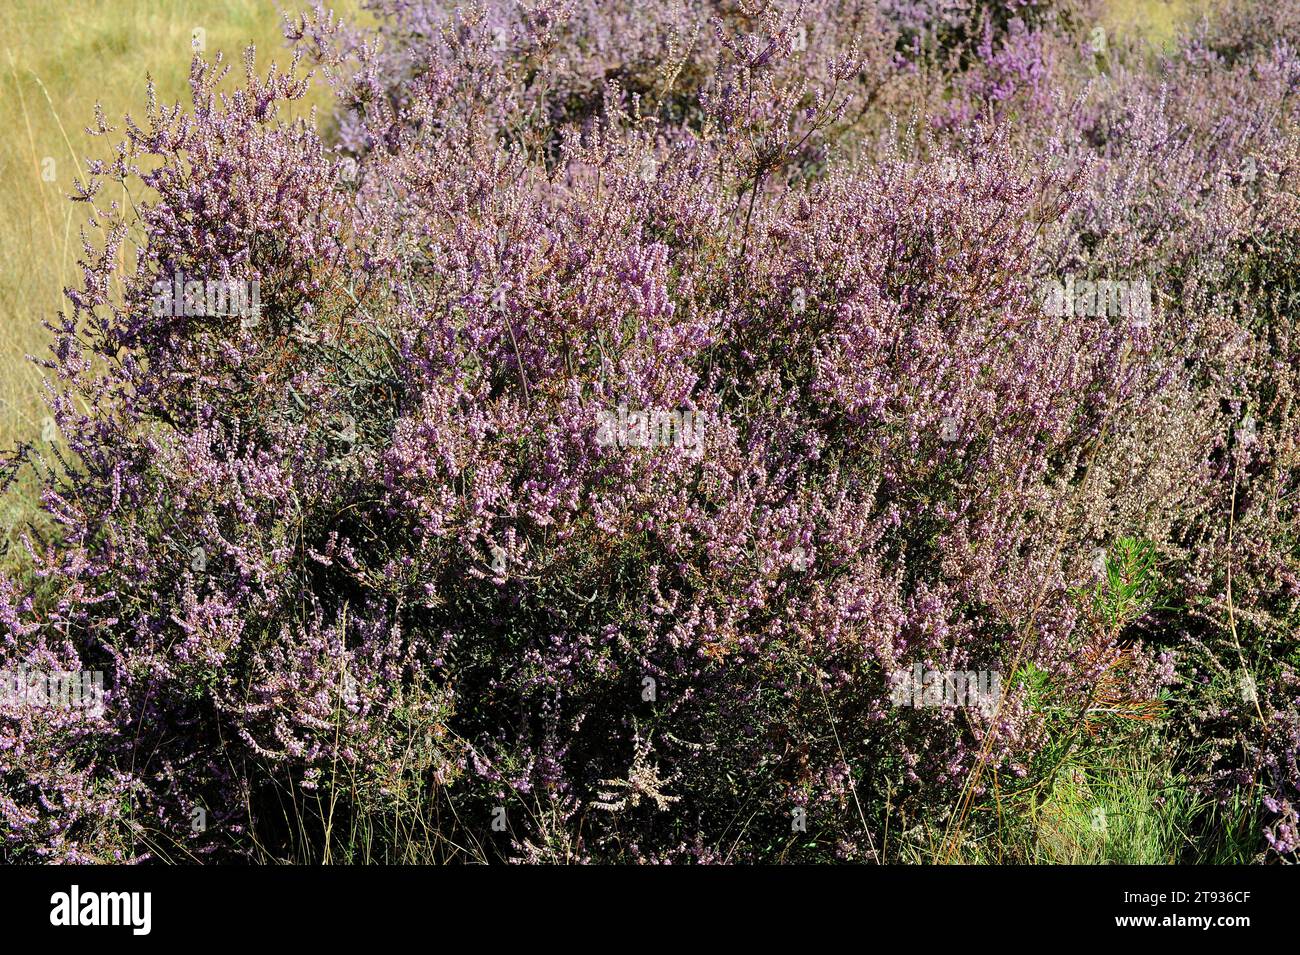 Common heather or ling (Calluna vulgaris) is a small shrub native to Europe acidic soils. This photo was taken in Soria province, Castilla y Leon, Spa Stock Photo